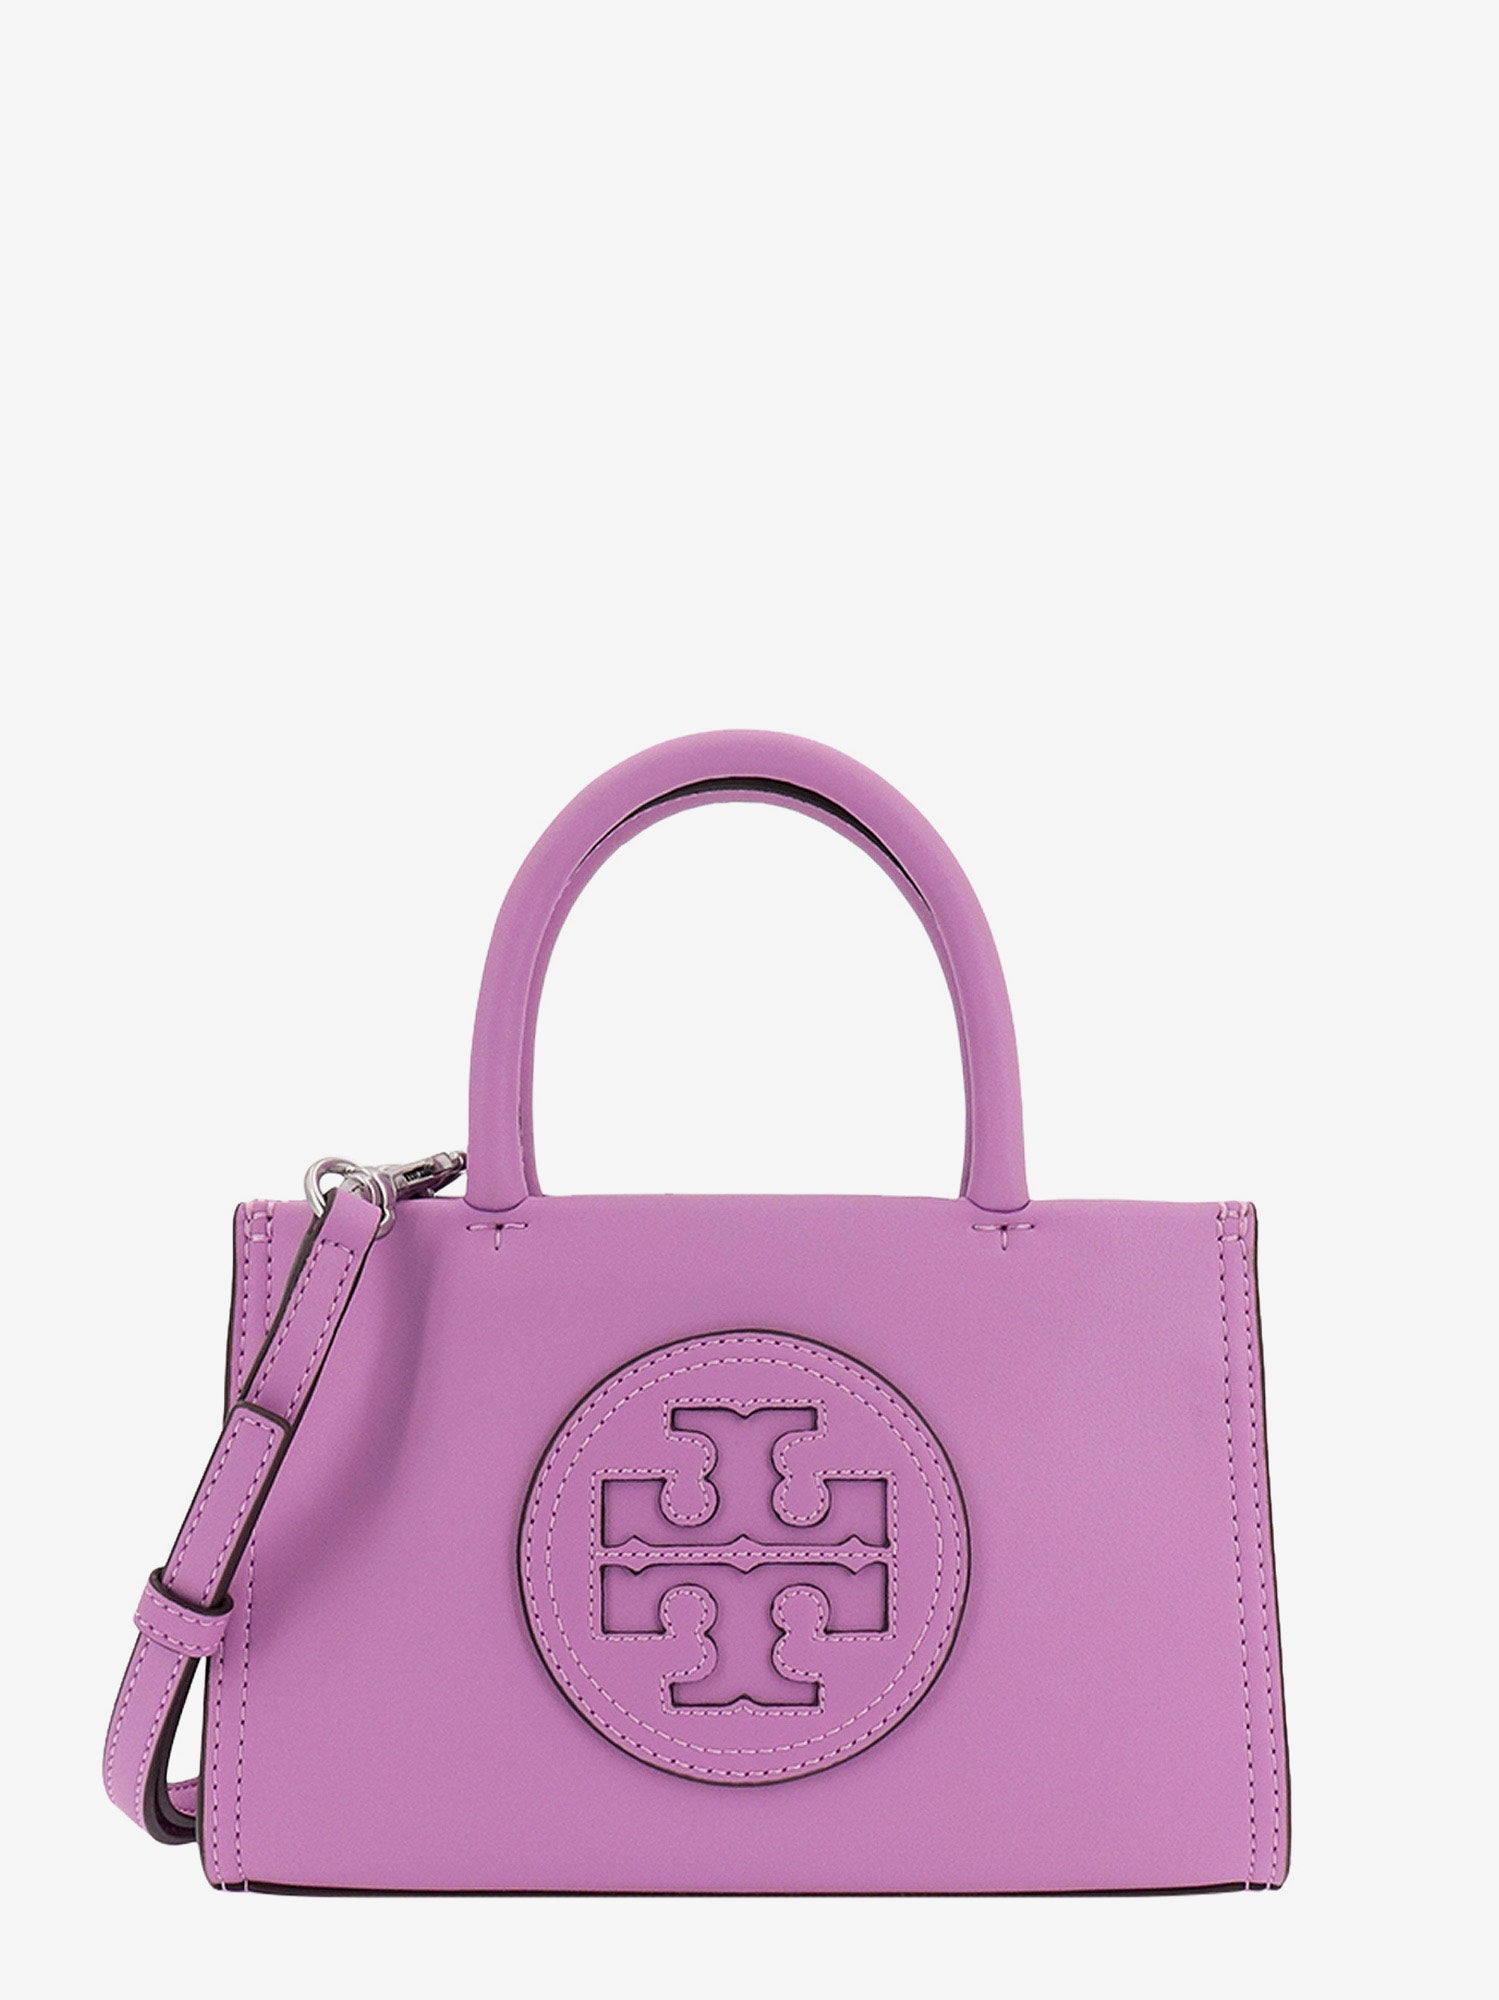 Tory Burch Handbag In Purple